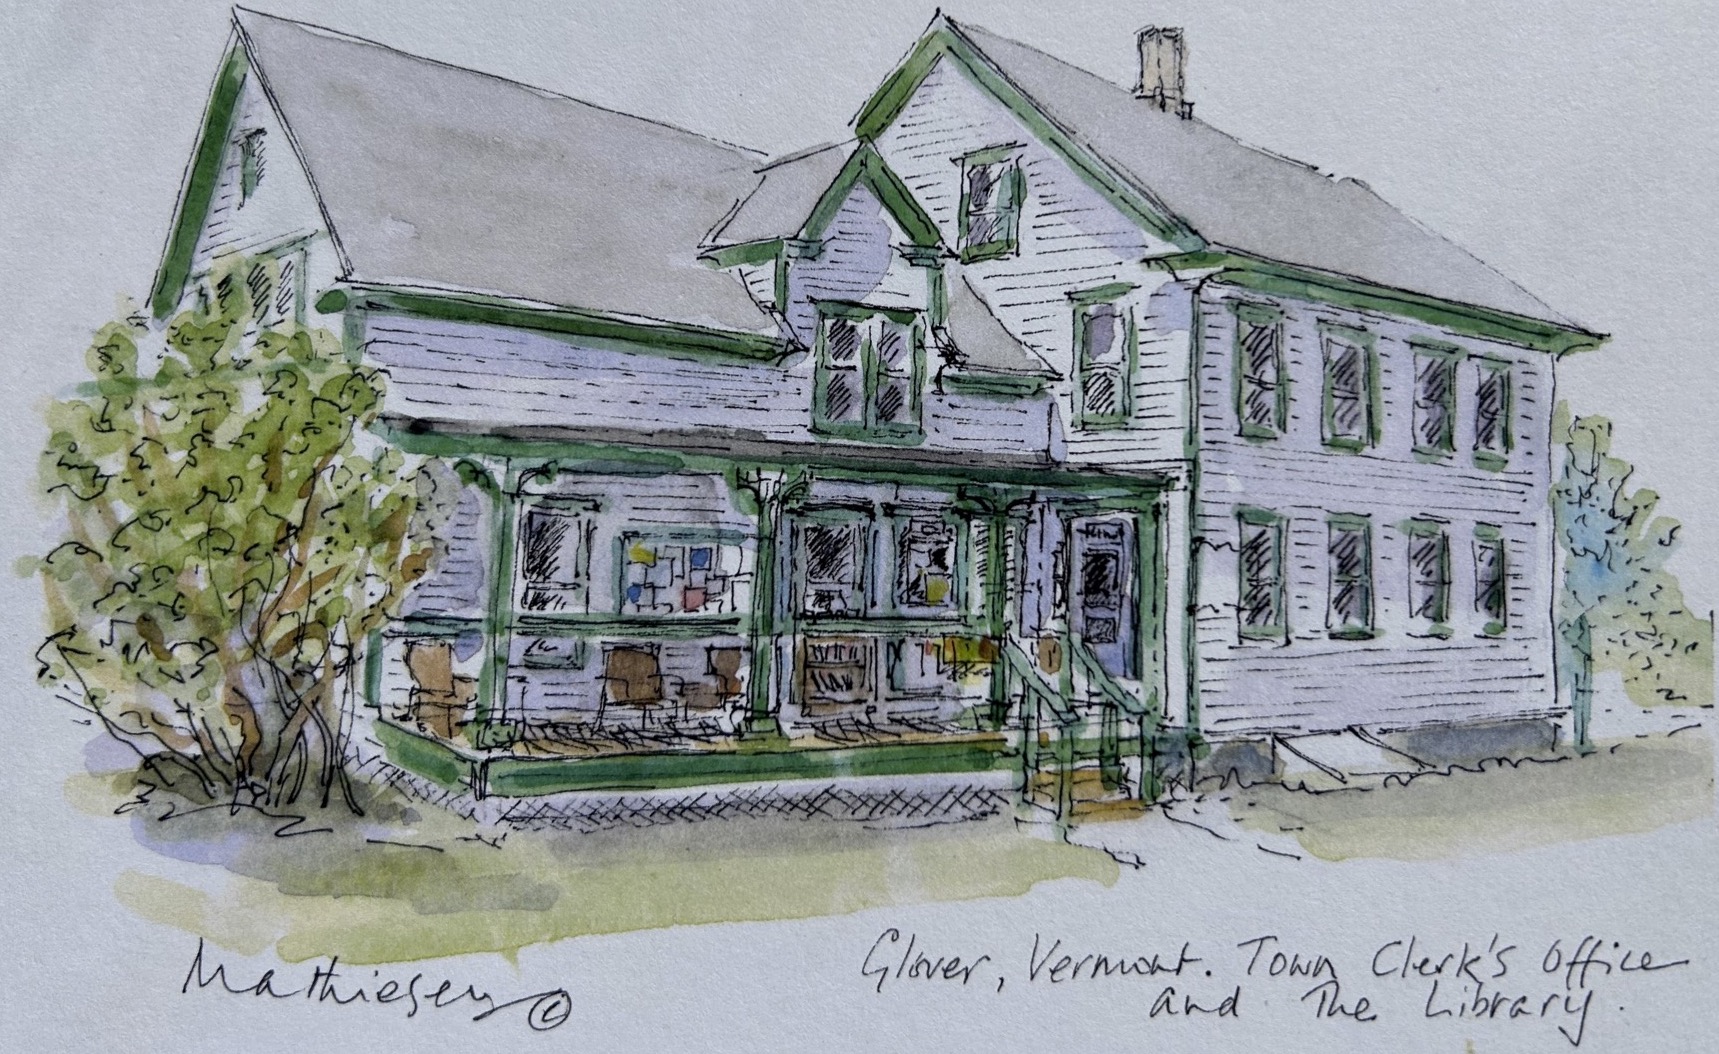 Town of Glover, Vermont